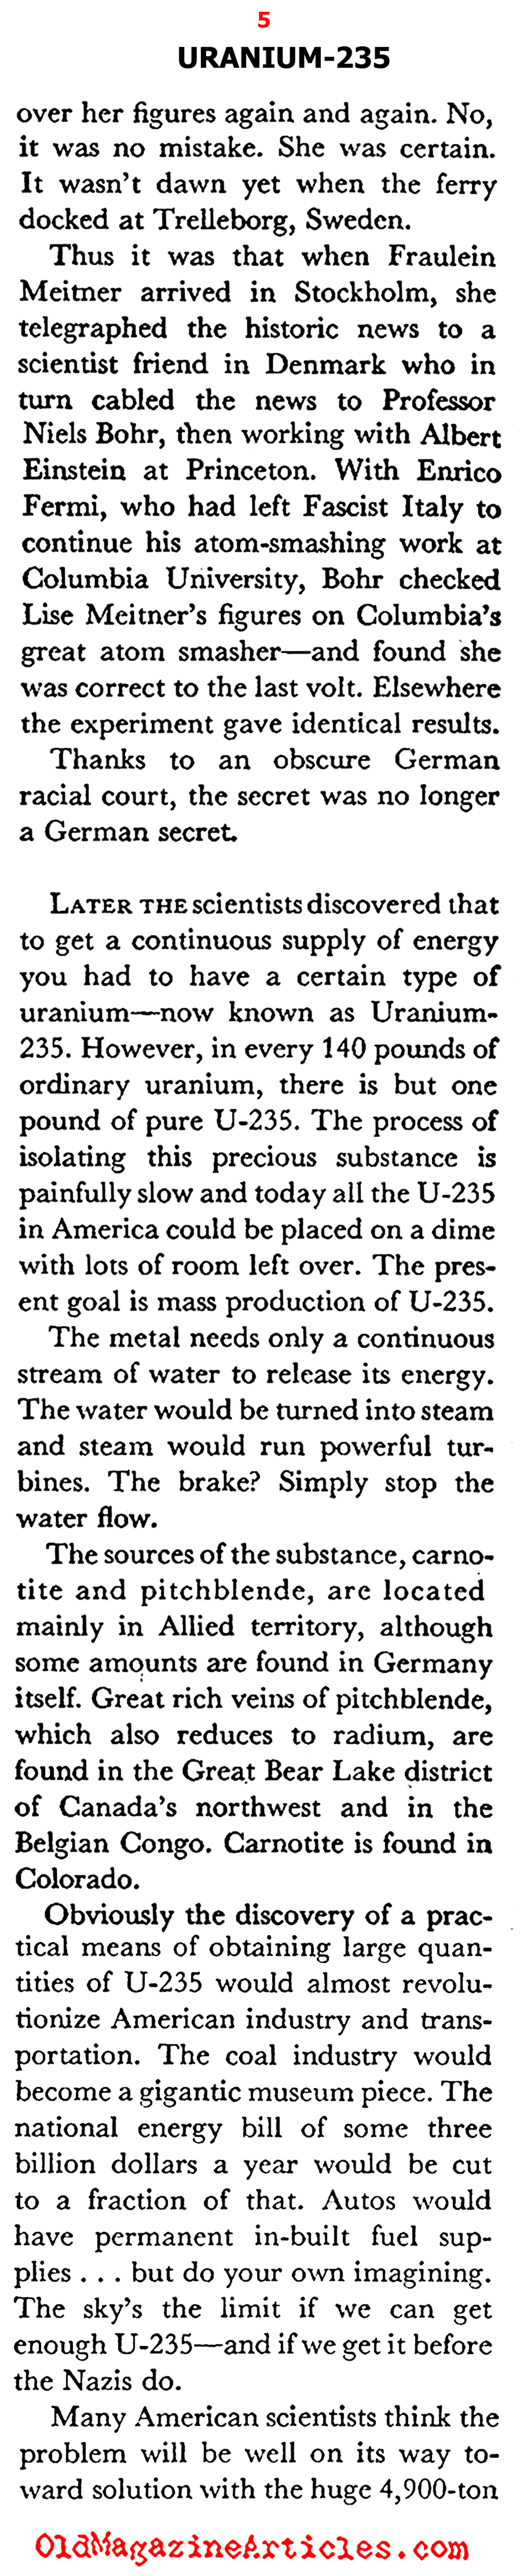 ''Uranium-235: Can It Win the War?'' (Coronet Magazine, 1942)